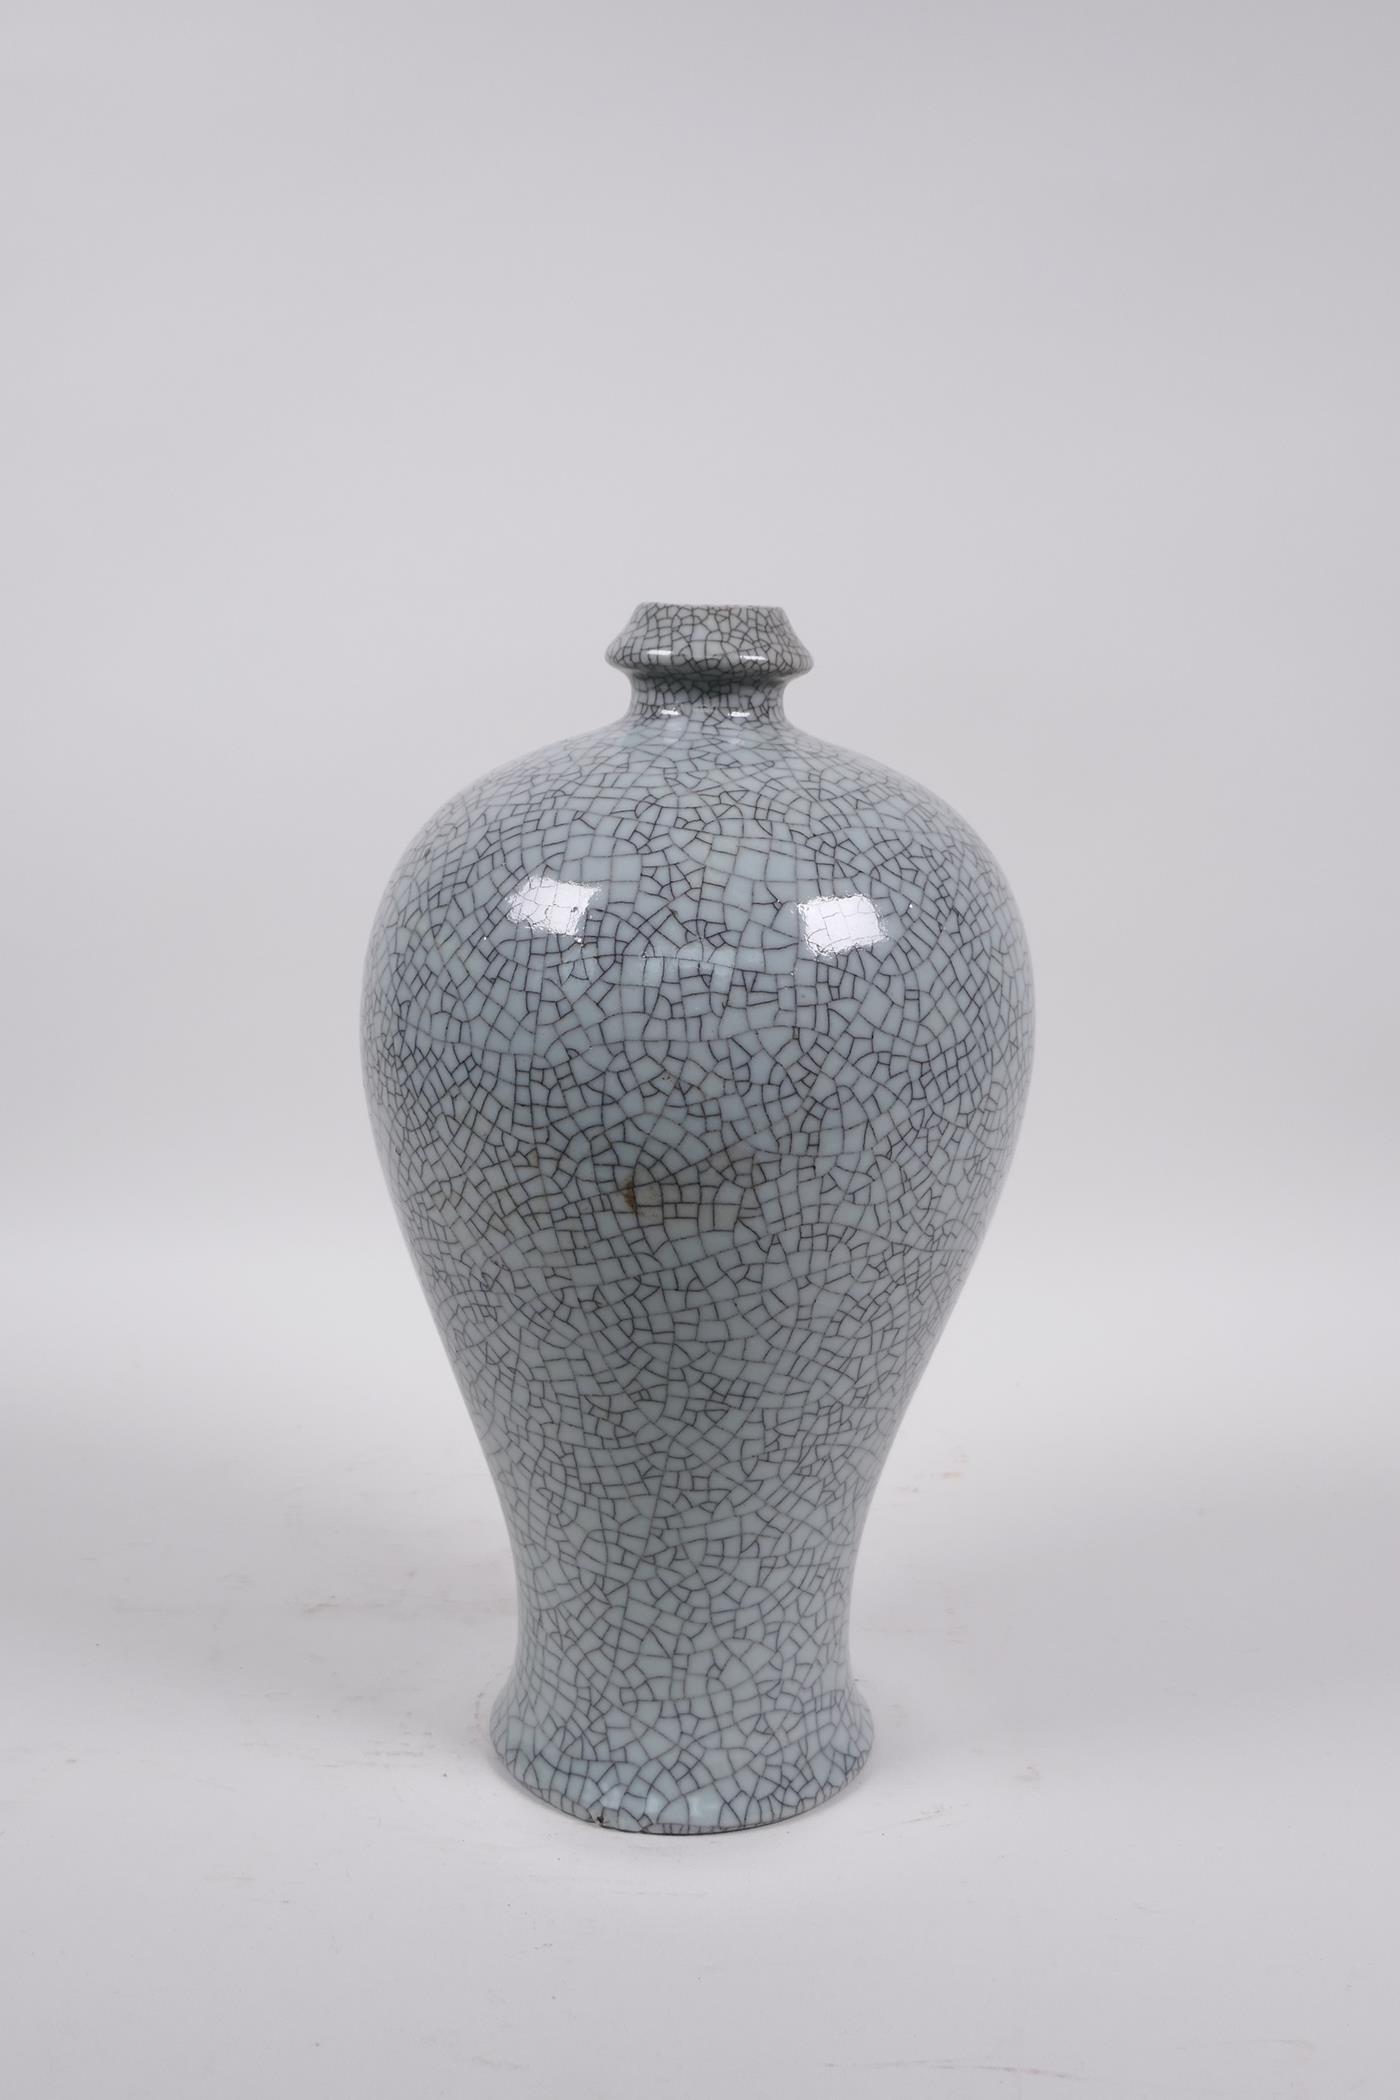 A celadon crackle glazed porcelain meiping vase of Chinese origin, 10" high - Image 2 of 4